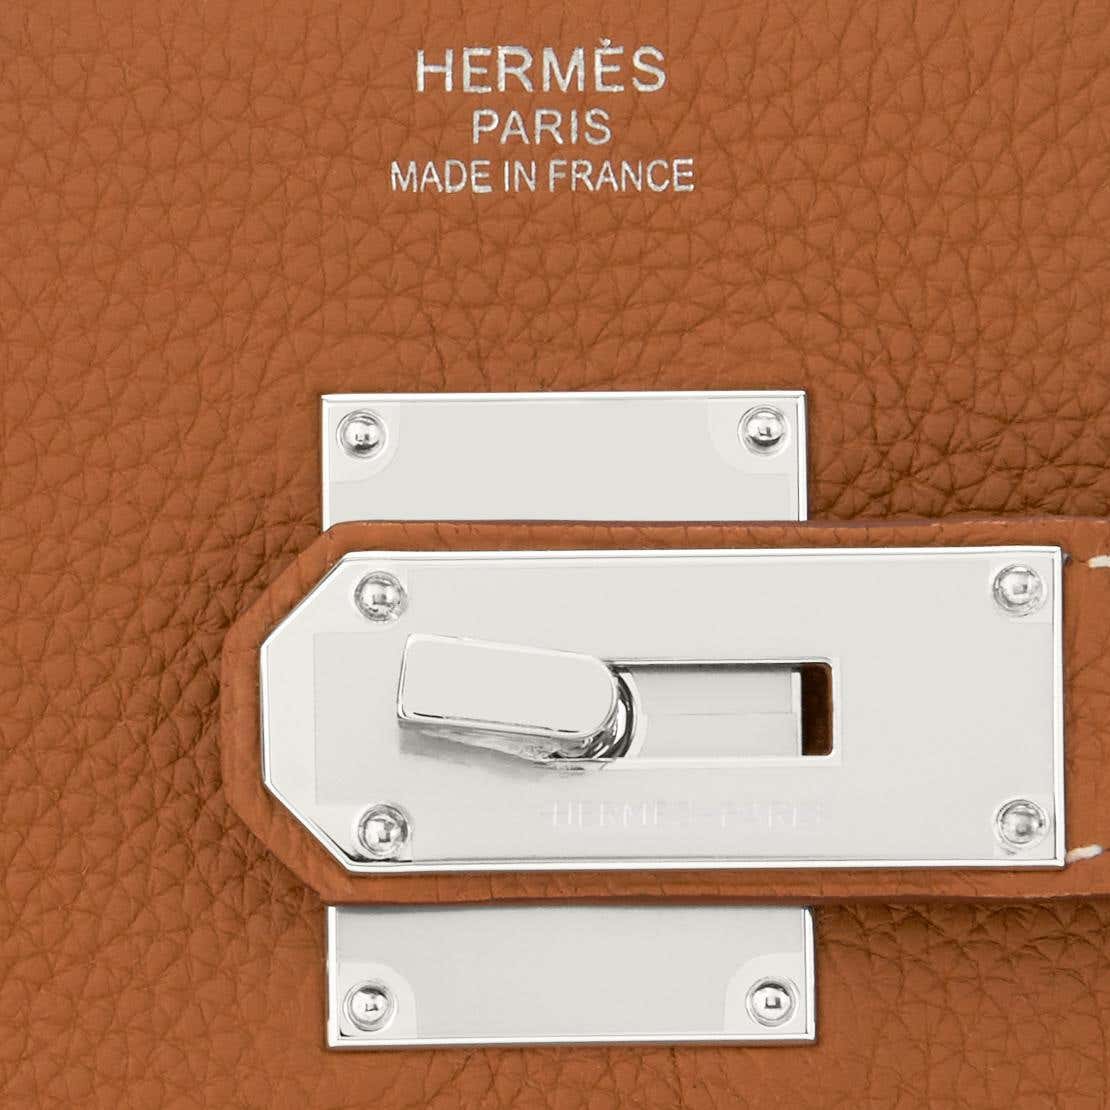 Hermes Birkin 40cm Togo Leather Darkbrown Handbag with Silver Hardware  Hermes